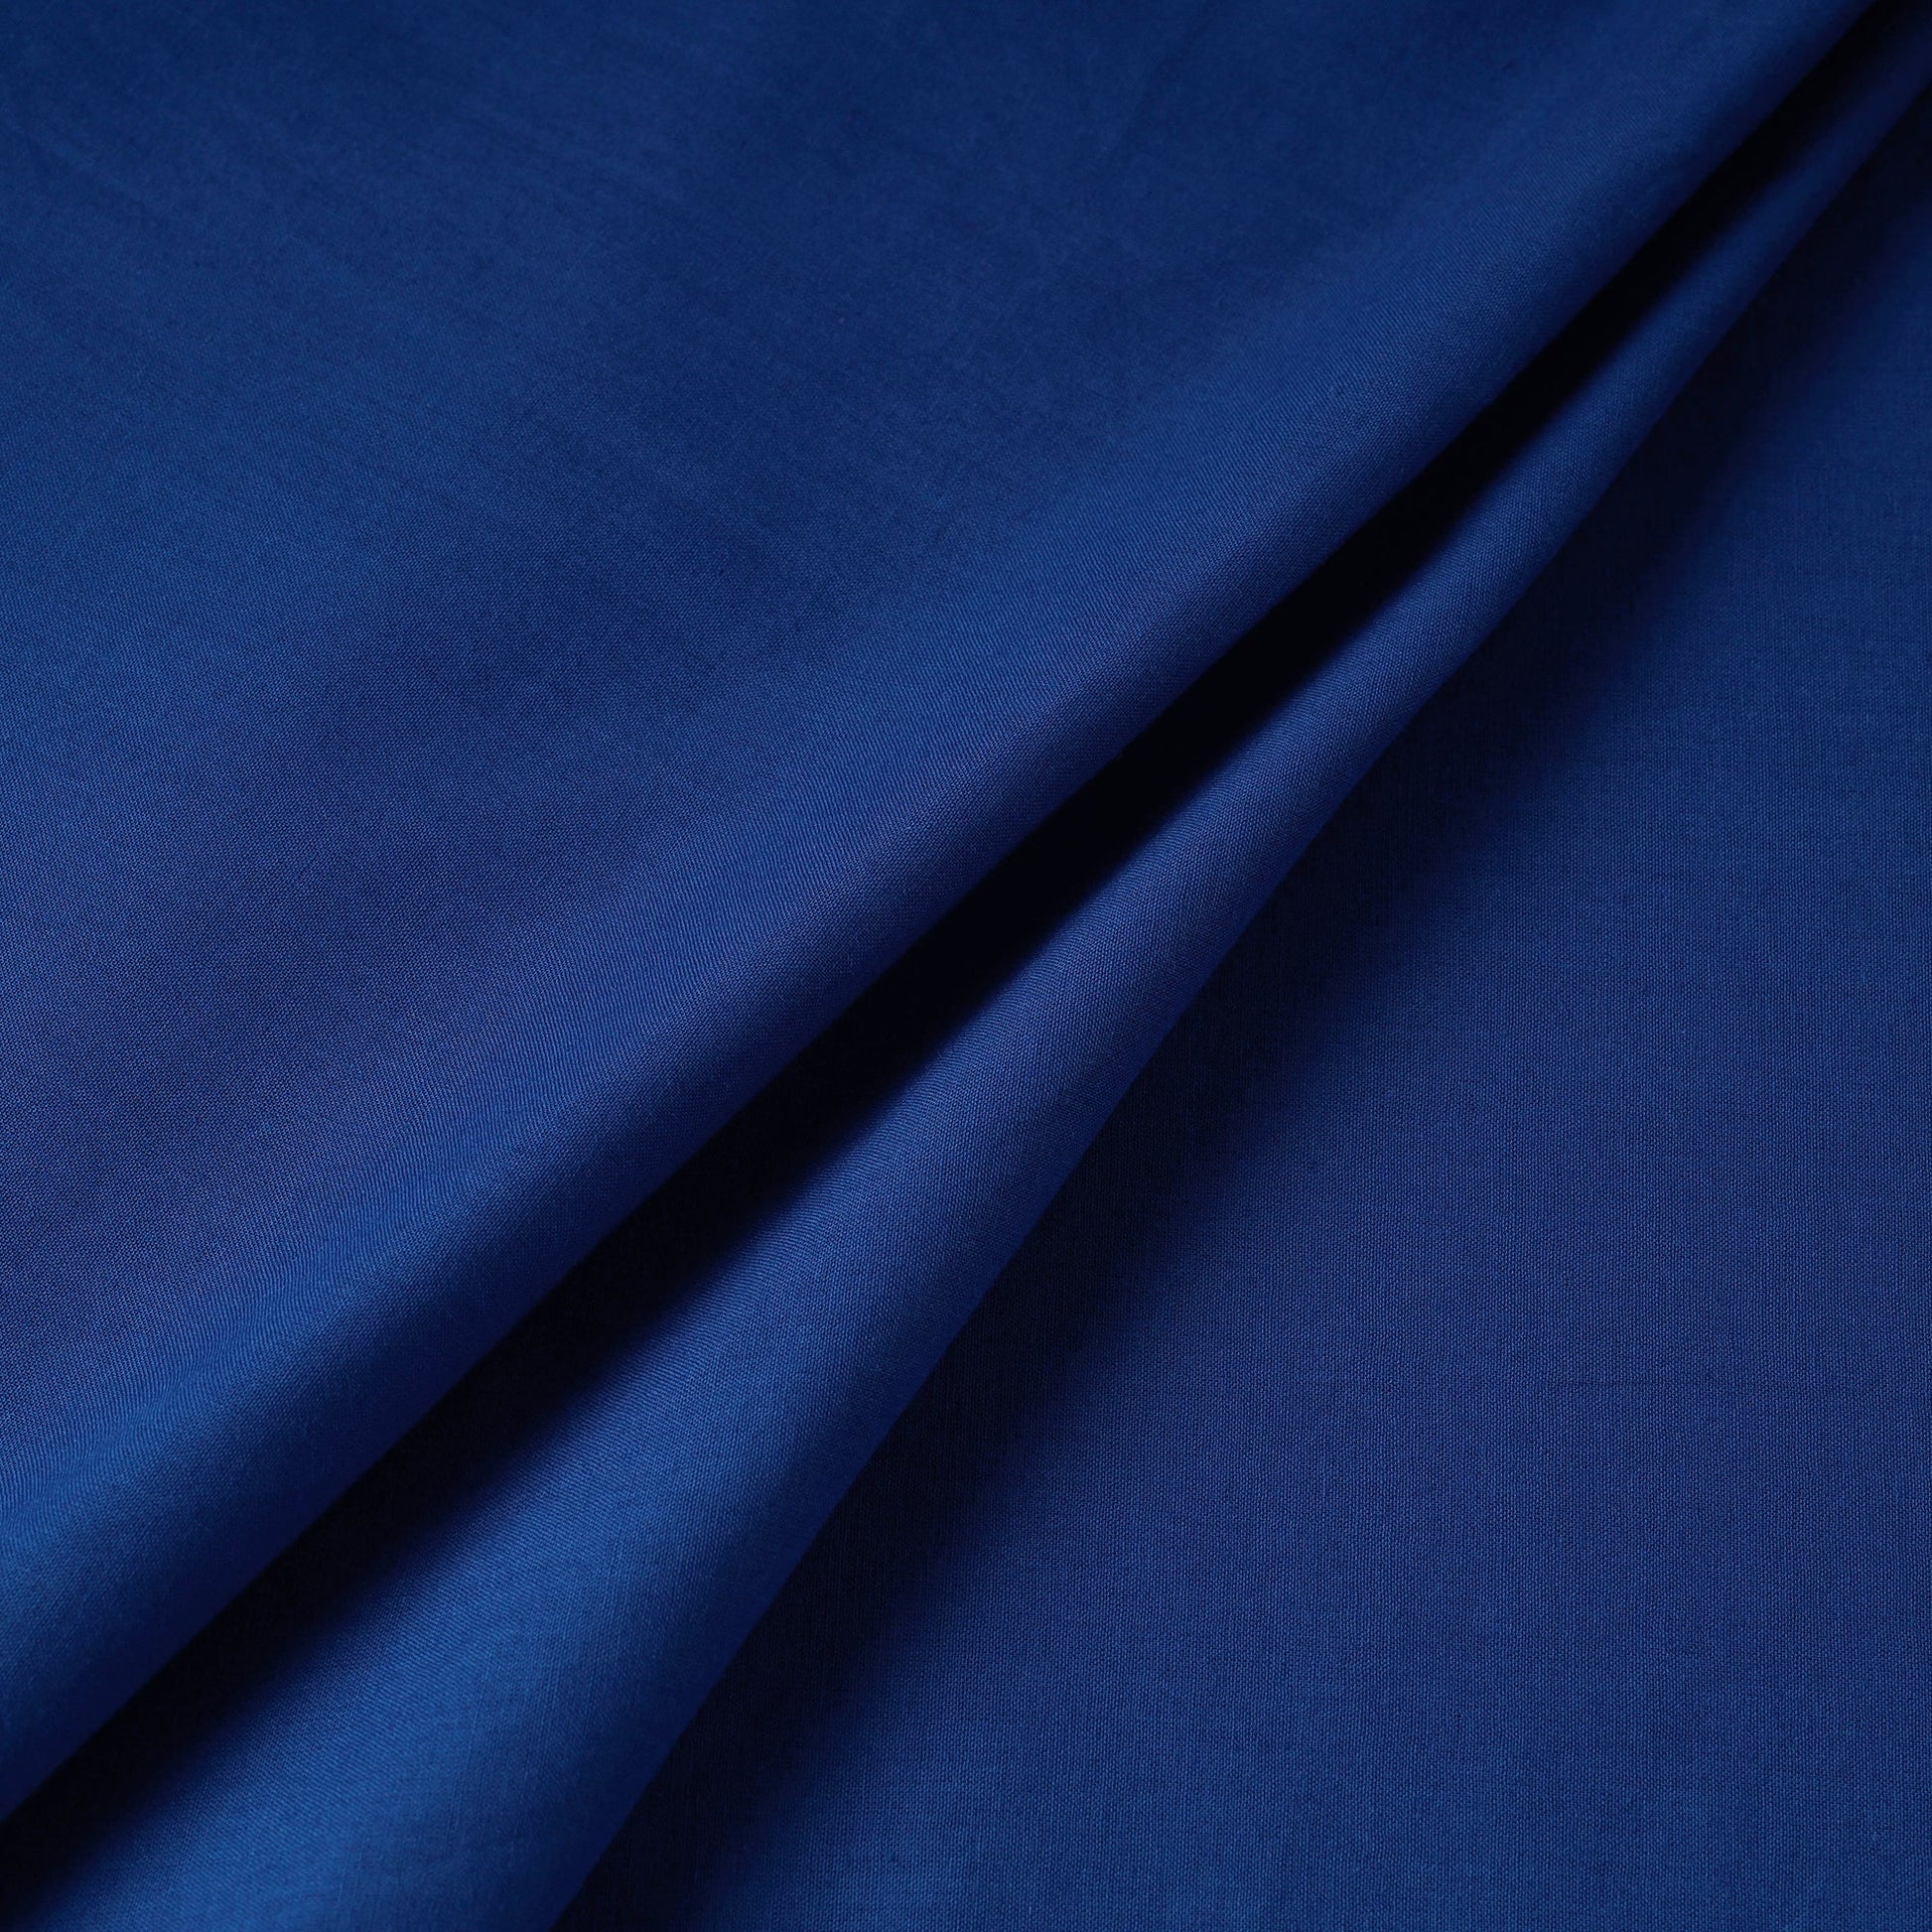 Blue - Prewashed Plain Dyed Cotton Fabric (Copy) by ITOKRI CRAFTS INITIATIVE